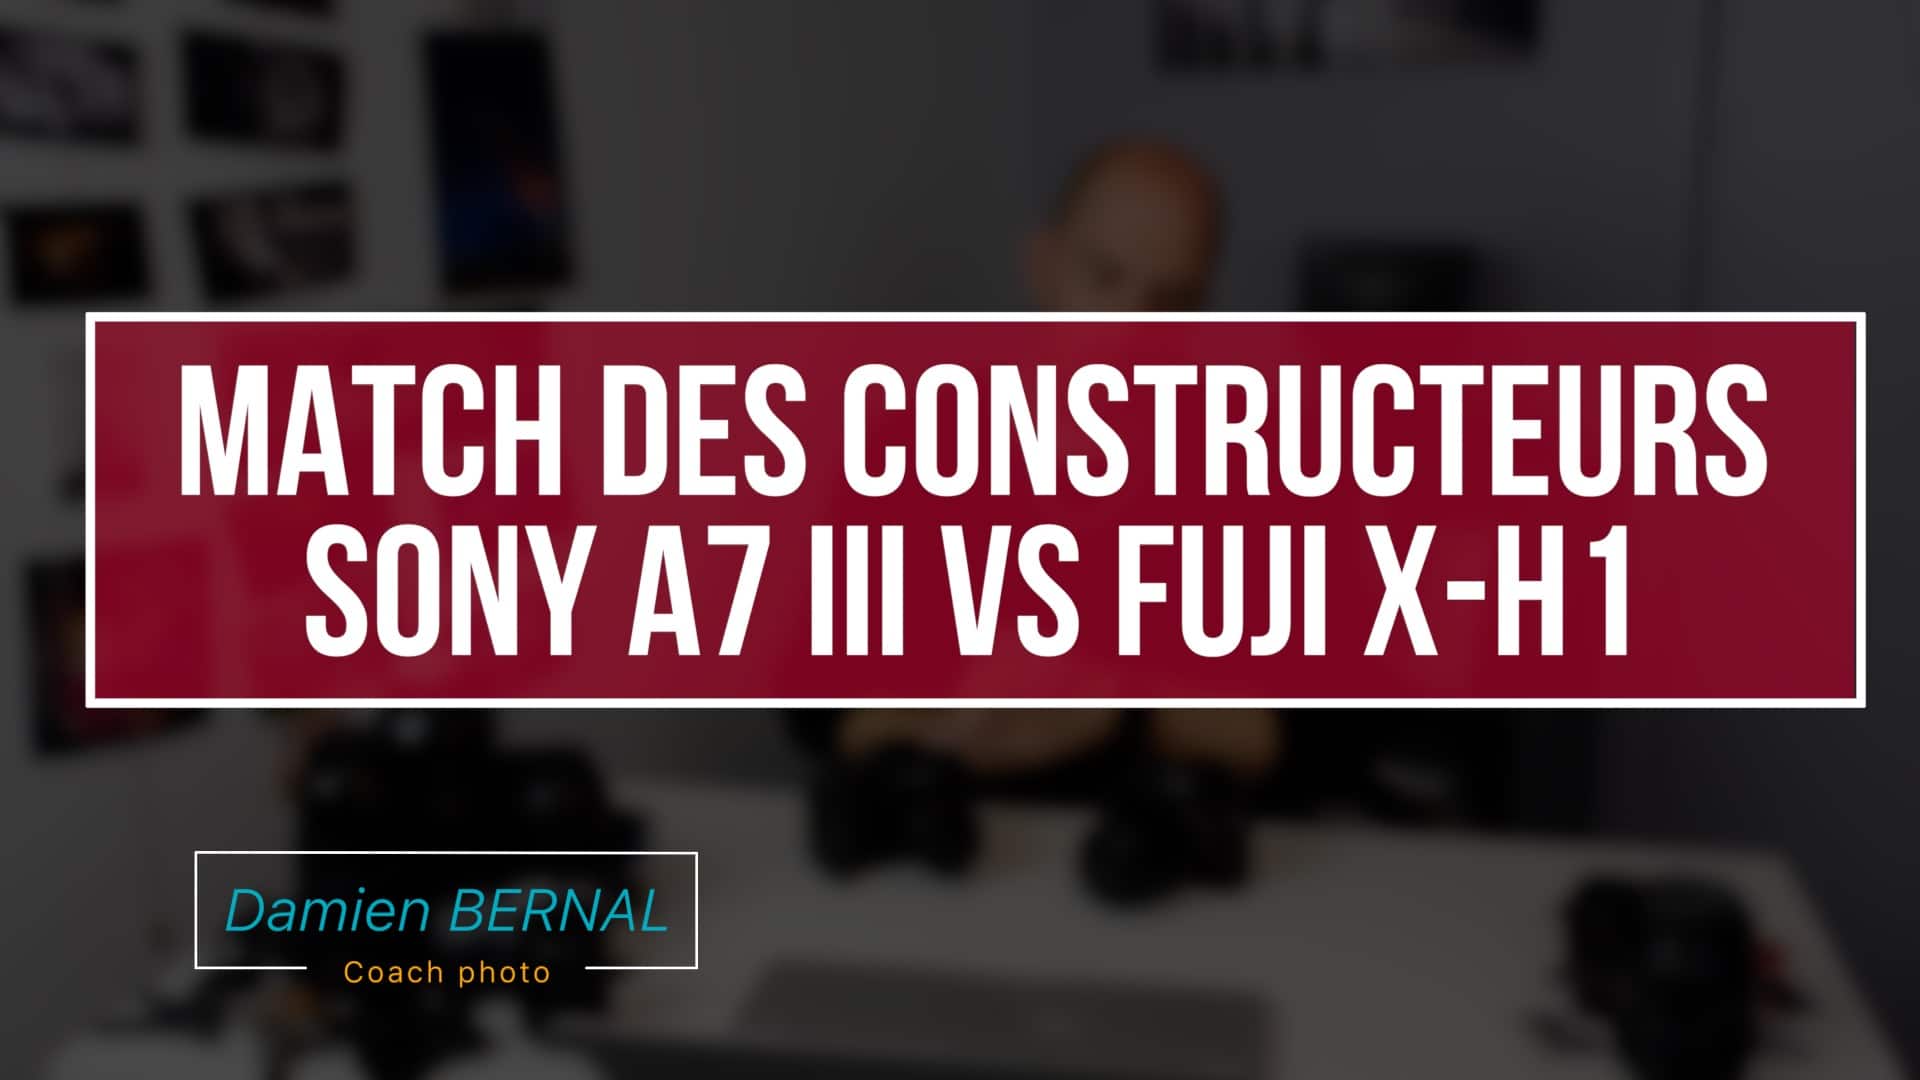 Sony A7 III vs Fujifilm X-H1